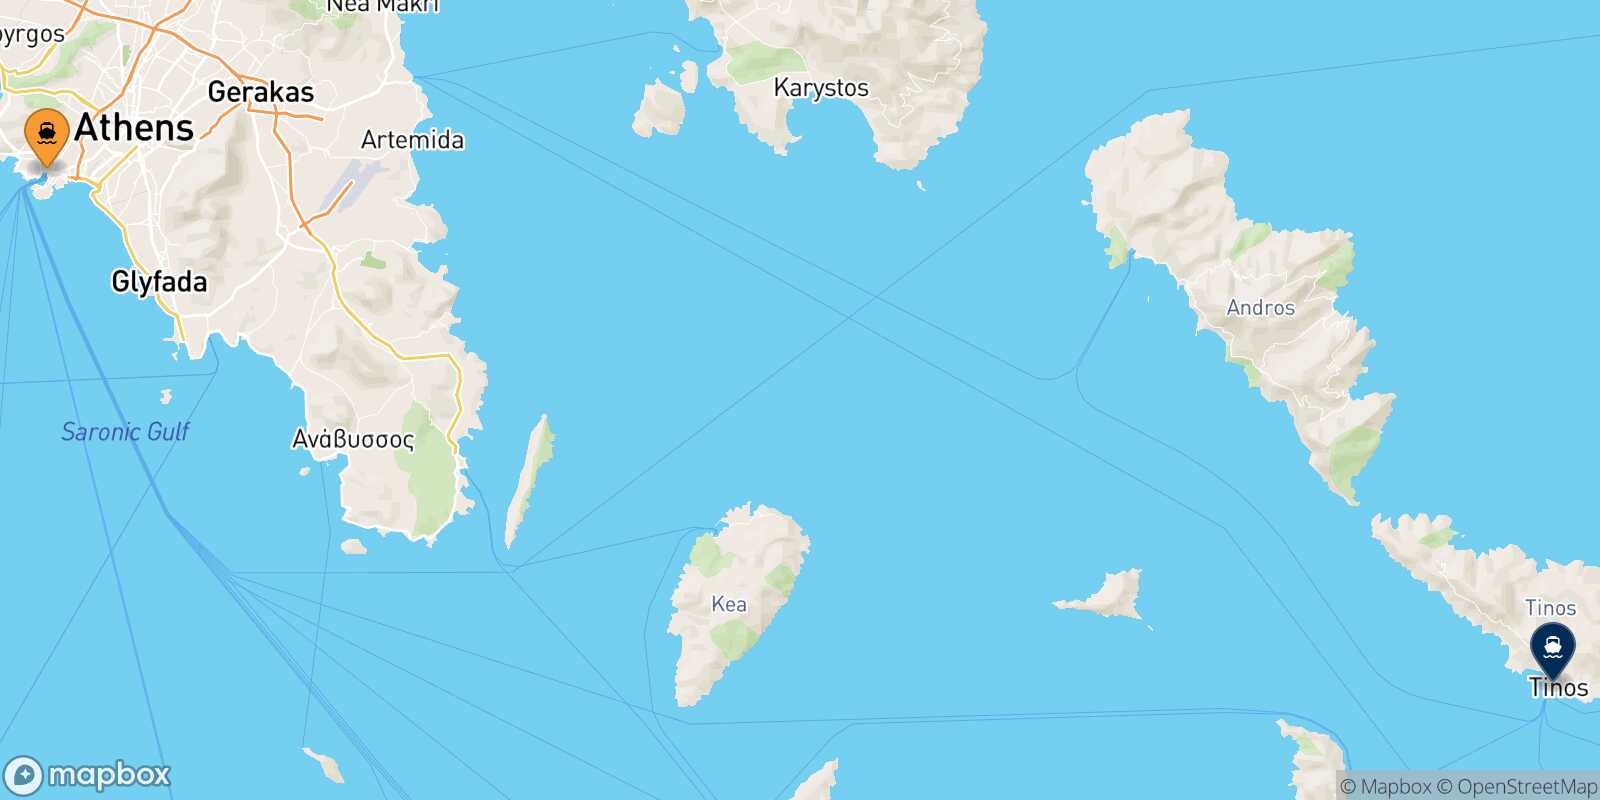 Piraeus Tinos route map